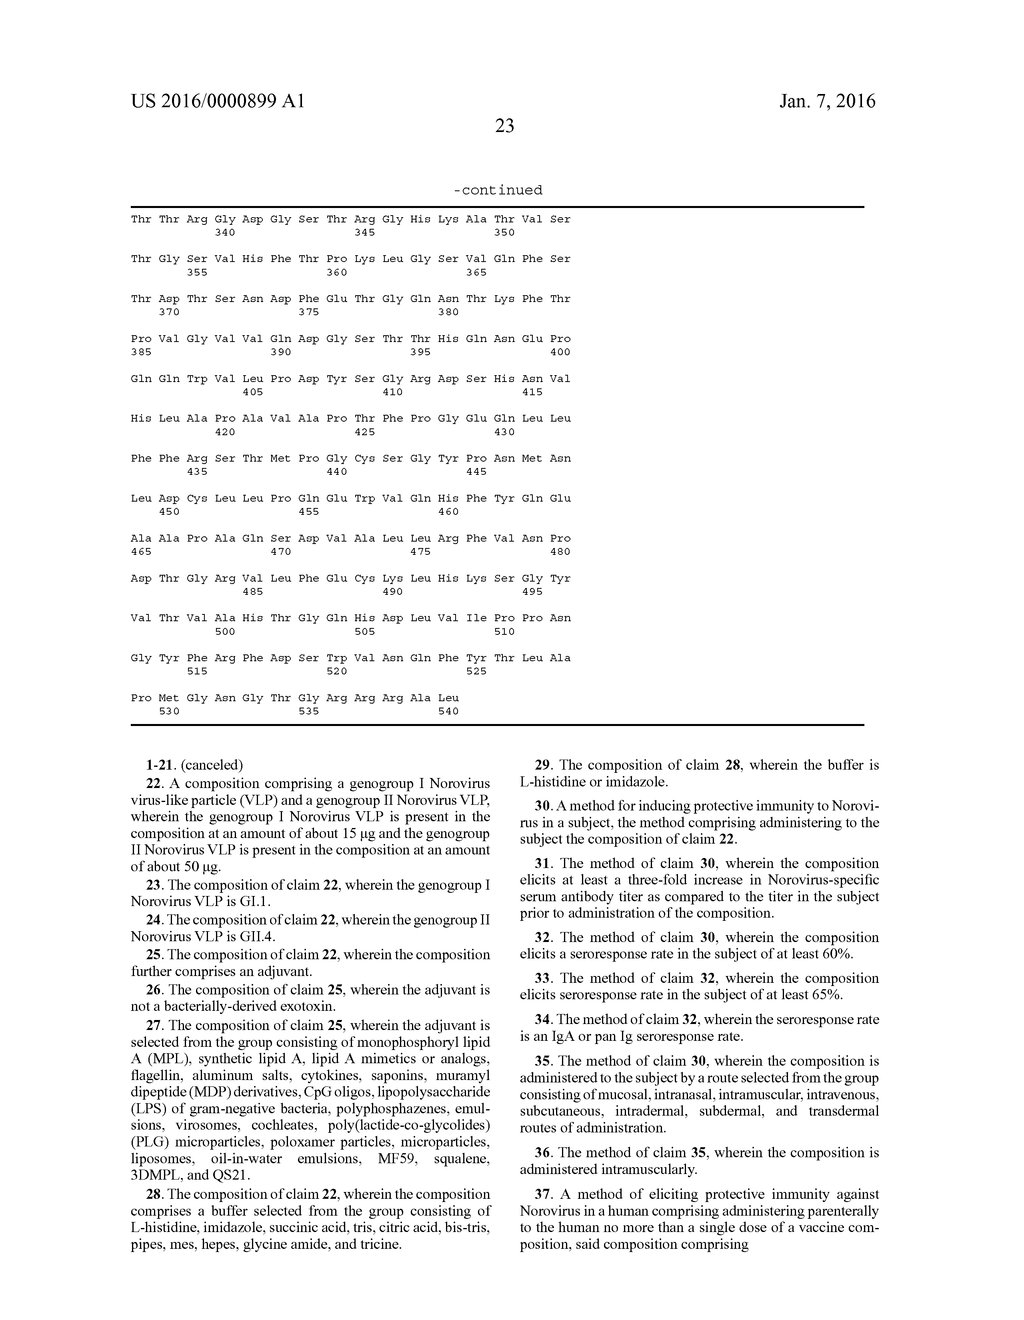 PARENTERAL NOROVIRUS VACCINE FORMULATIONS - diagram, schematic, and image 36